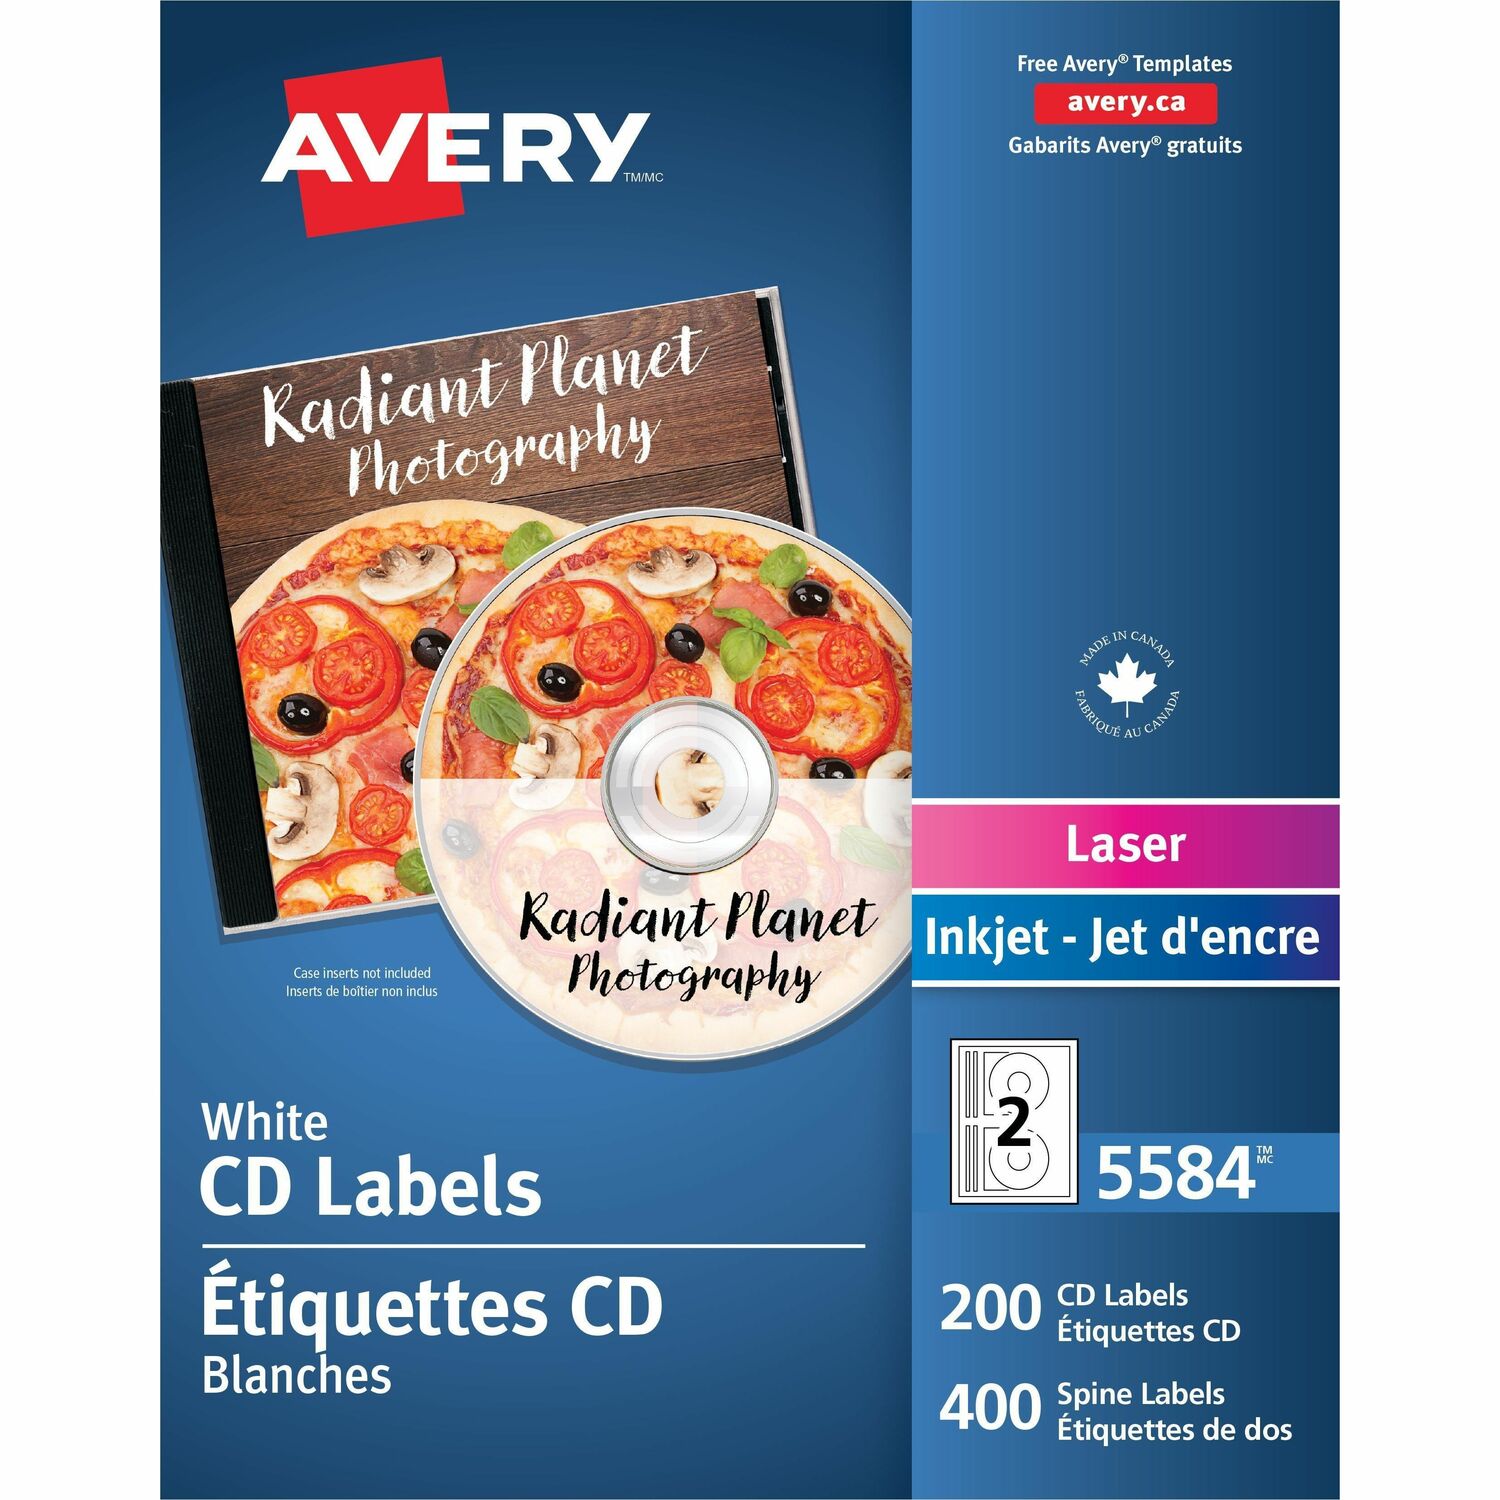 avery-cd-dvd-label-madill-the-office-company